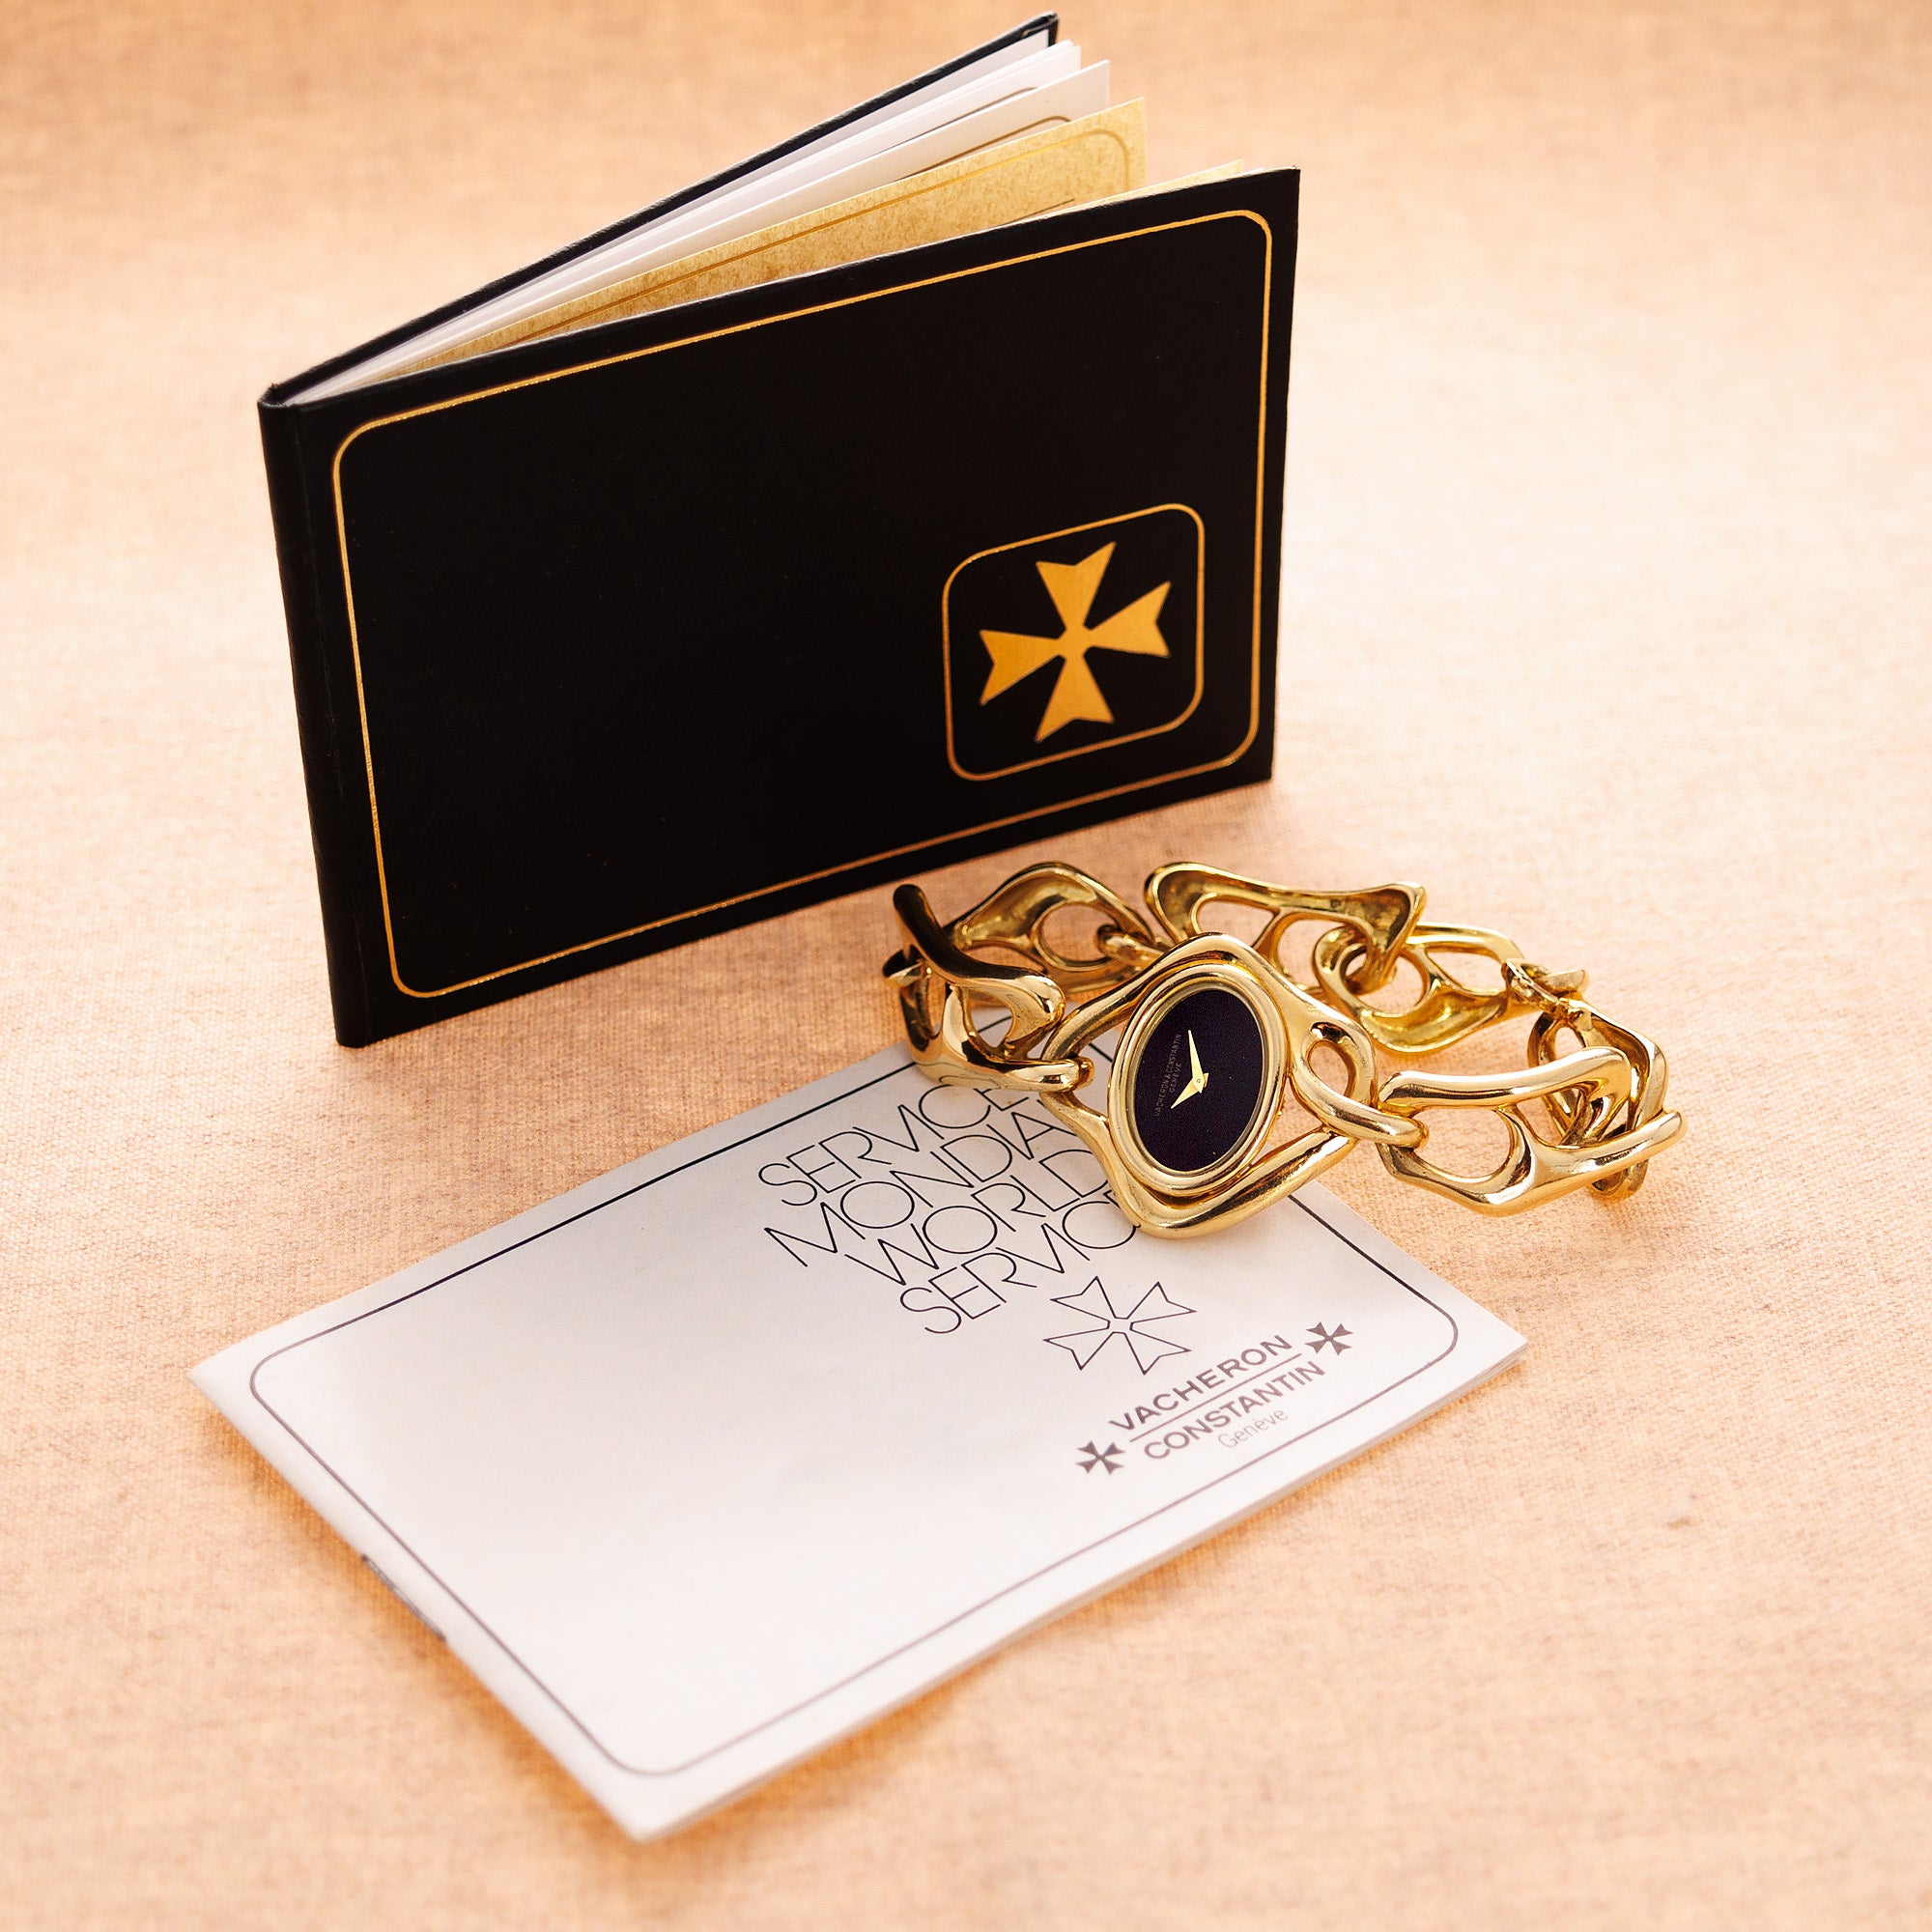 Vacheron Constantin - Vacheron Constantin Yellow Gold Onyx Dial Watch Ref. 18214 - The Keystone Watches